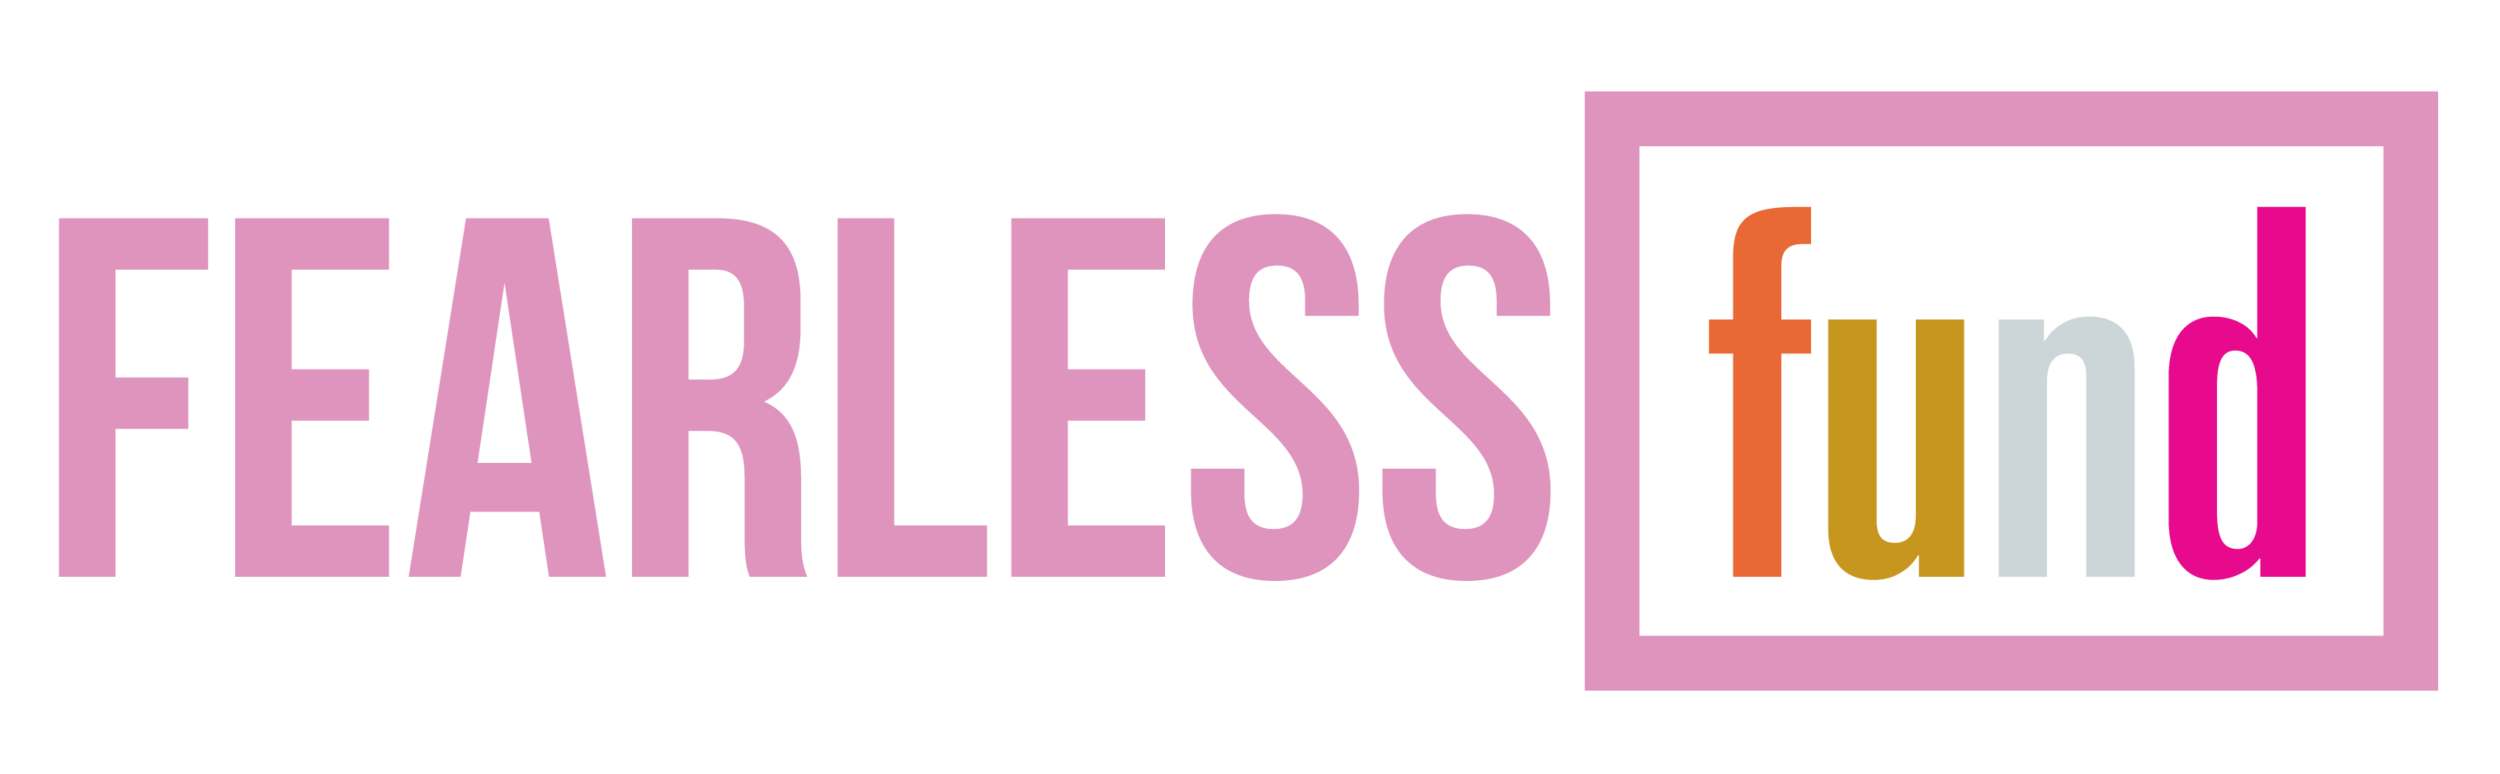 Fearless Fund logo